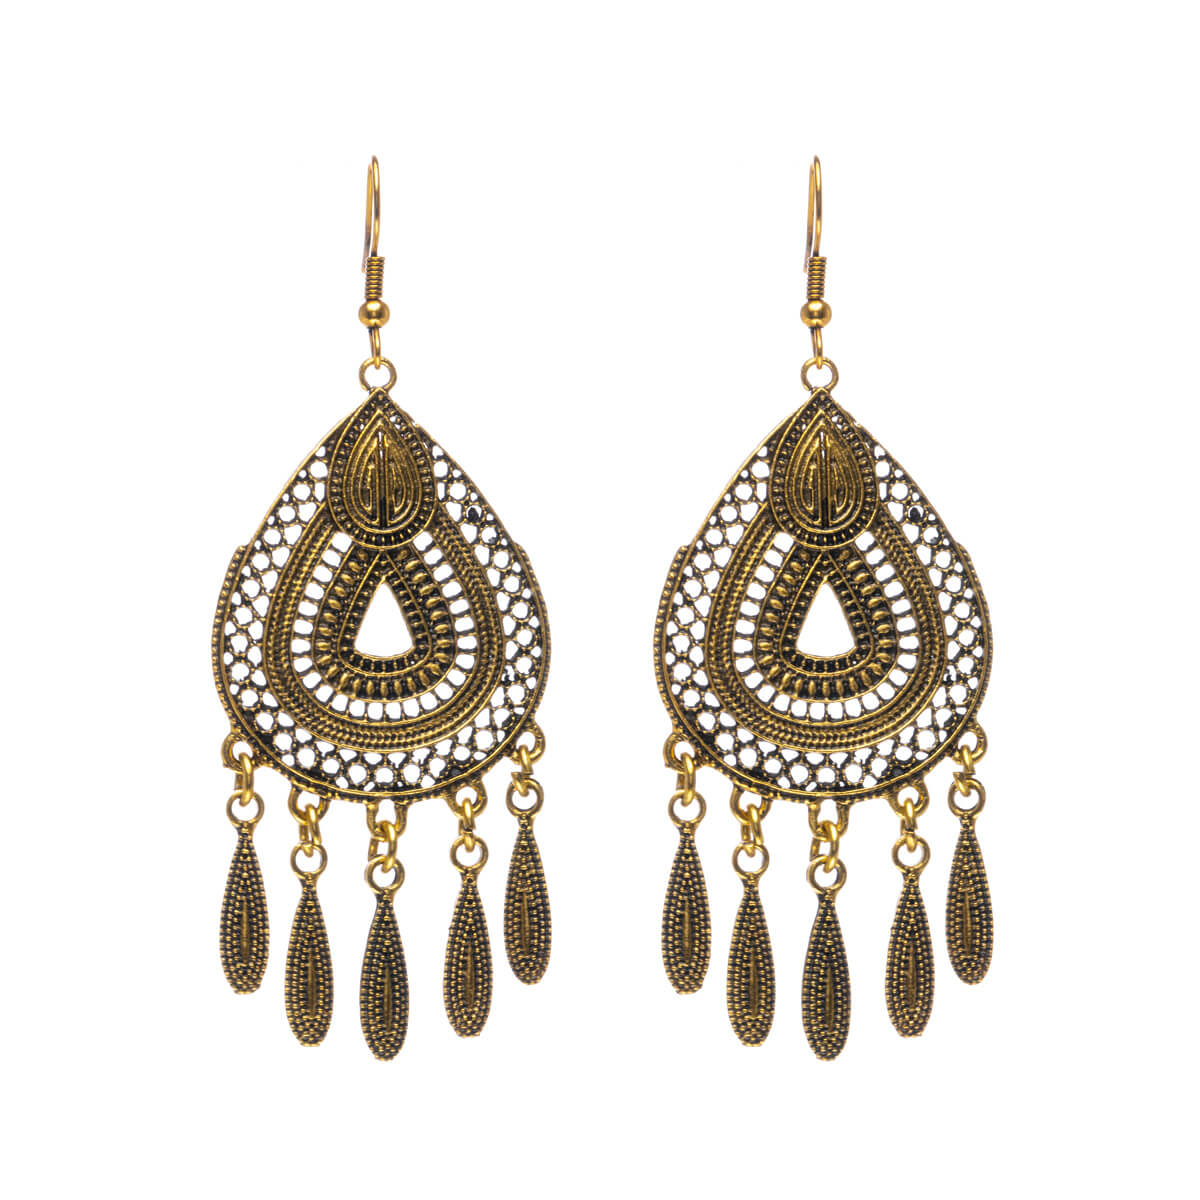 Drop shaped hanging earrings